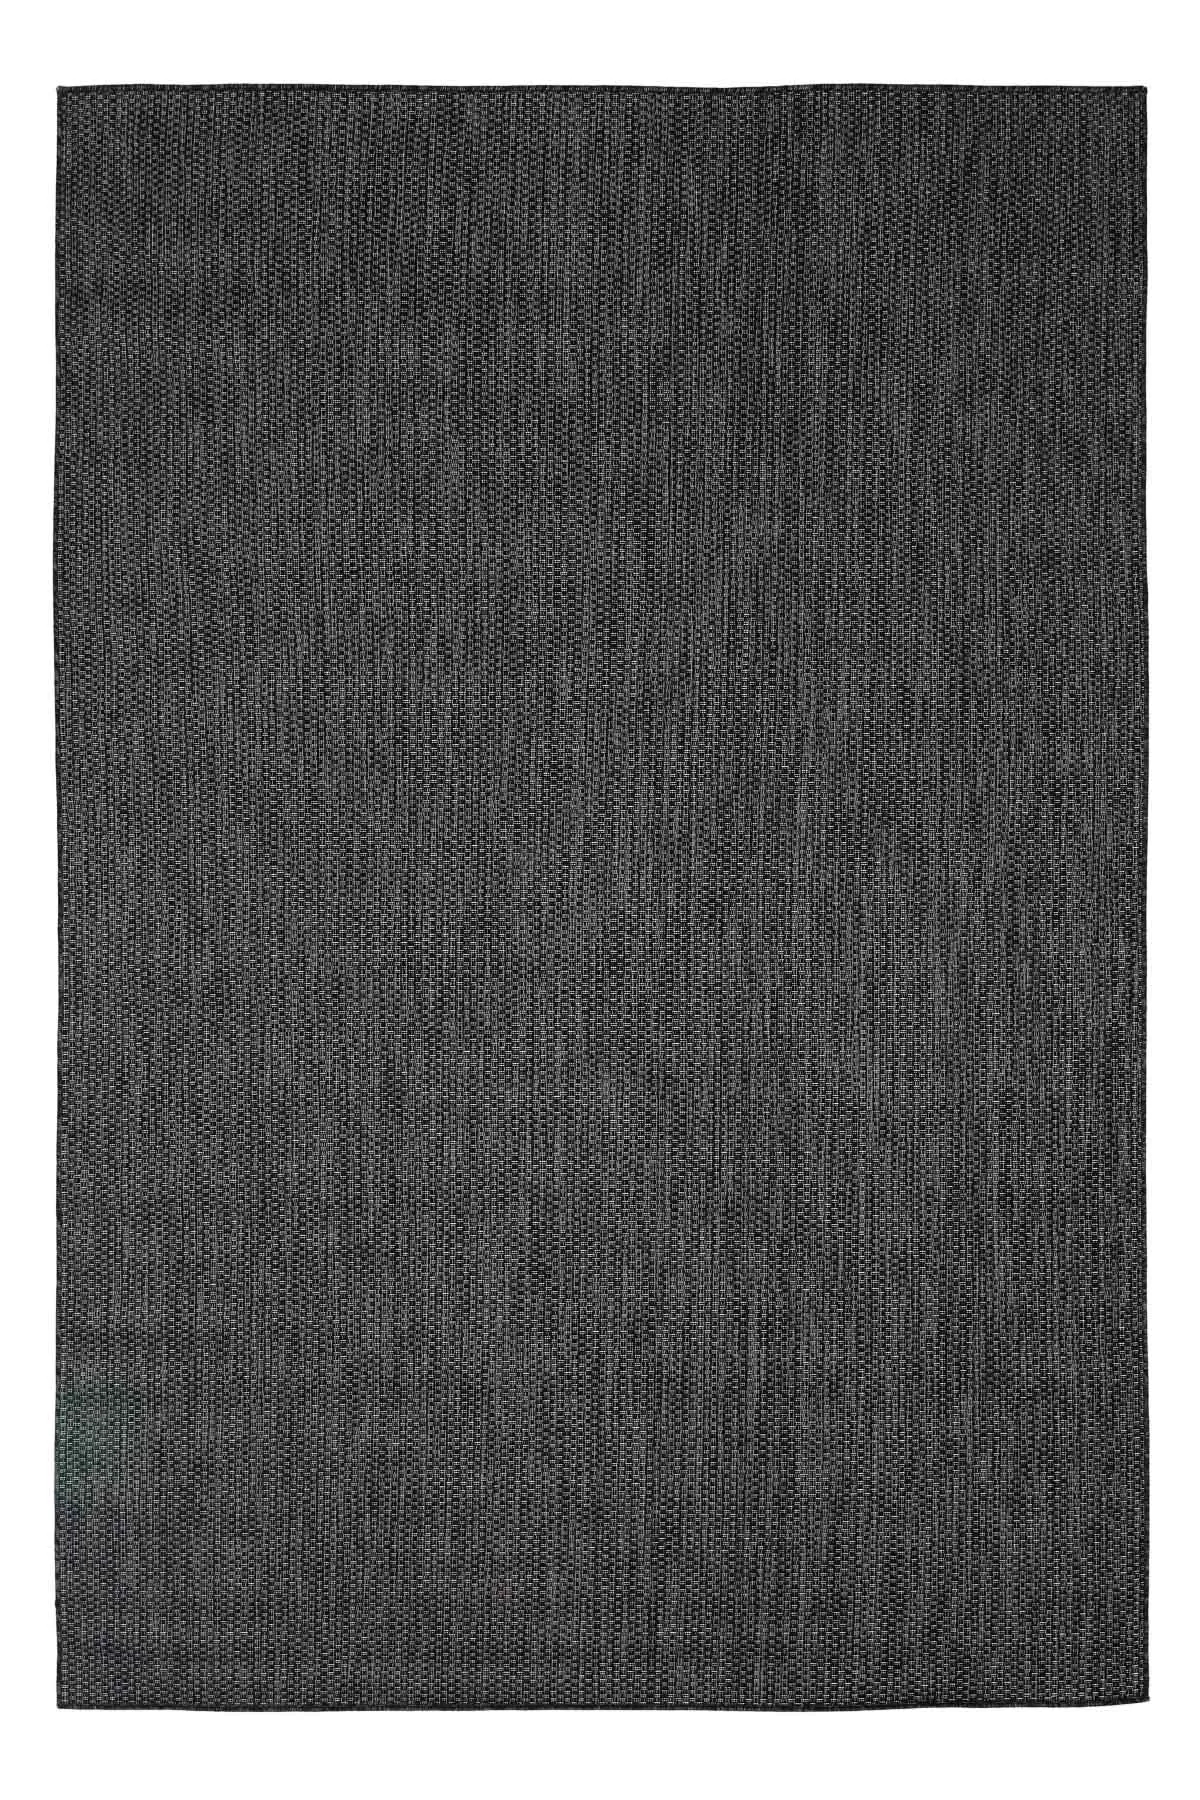 Potamia Alto Siyah Sisal Dekoratif İnce Makine Halısı 9000 - Thumbnail